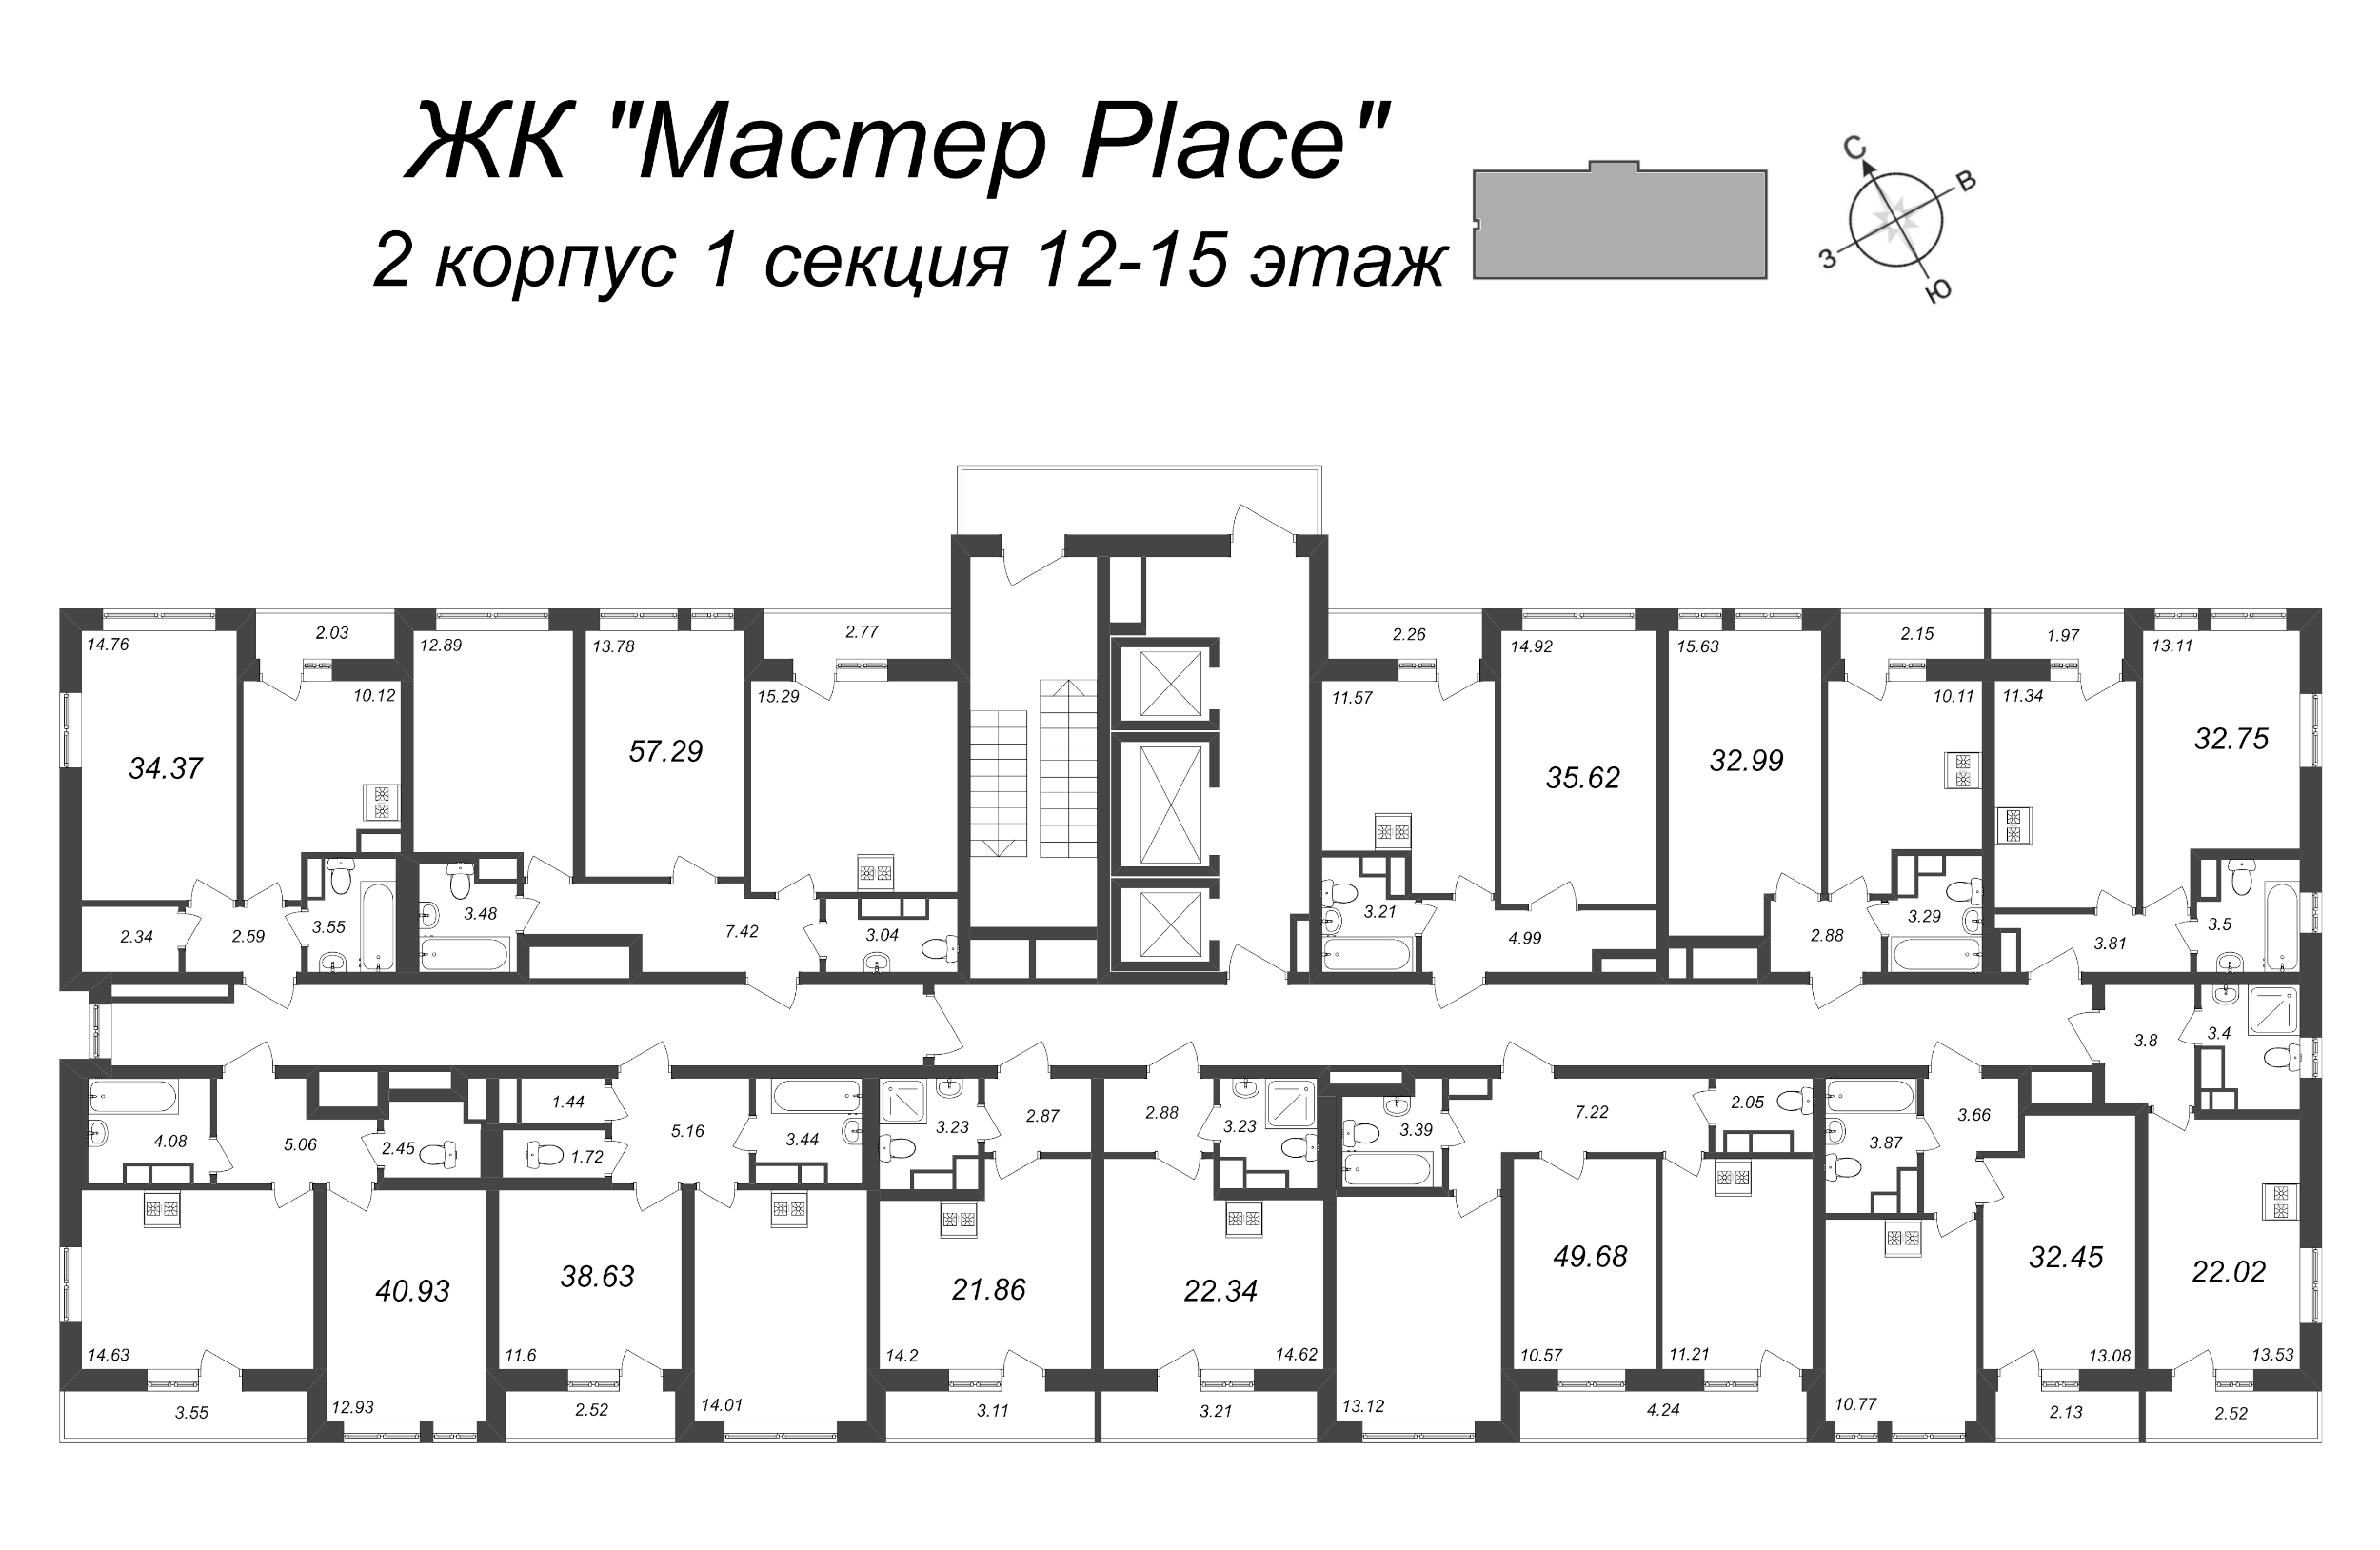 2-комнатная (Евро) квартира, 40.93 м² - планировка этажа